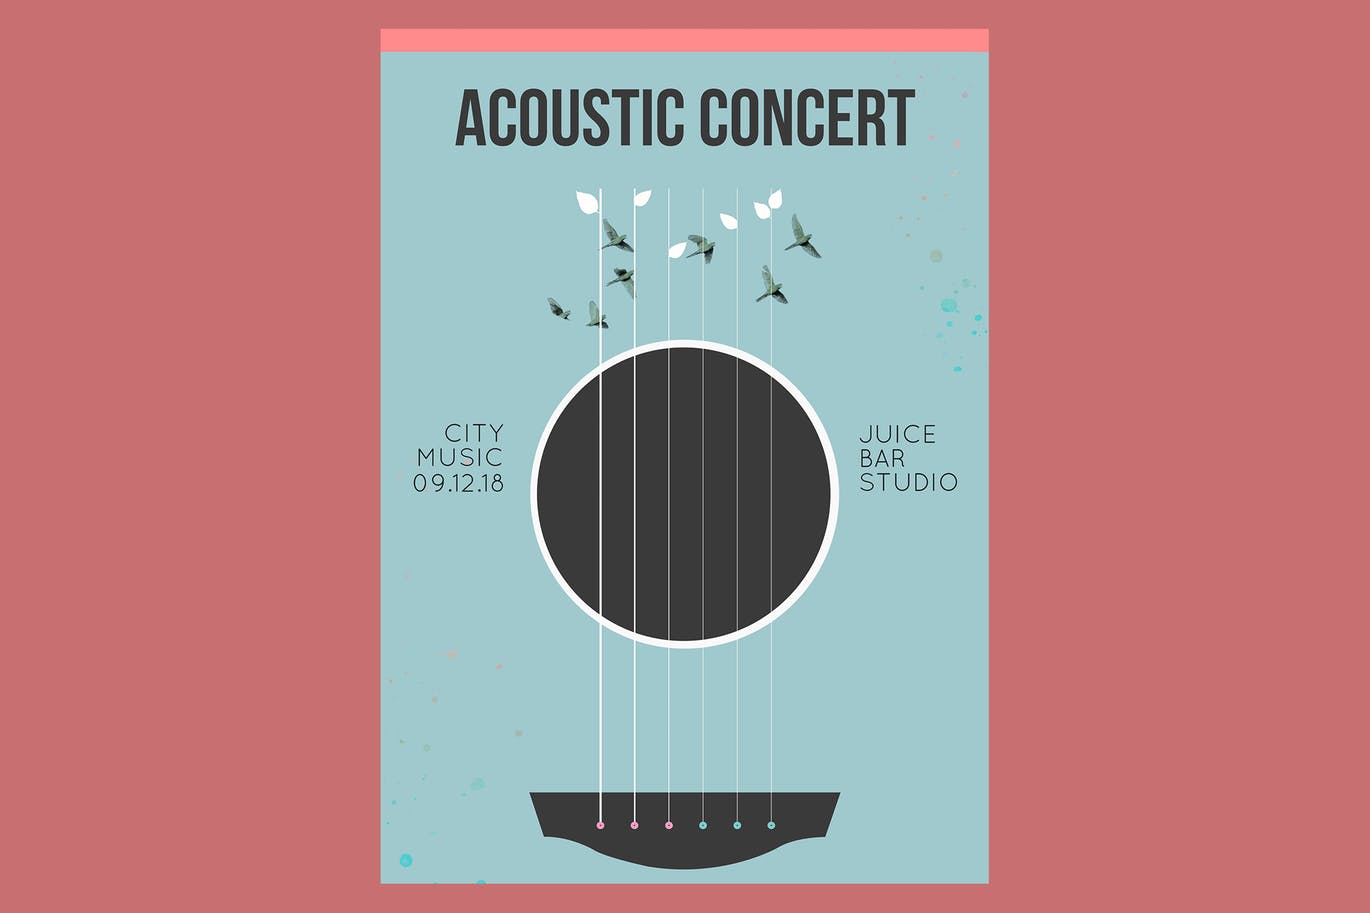 Acoustic concert flyer template